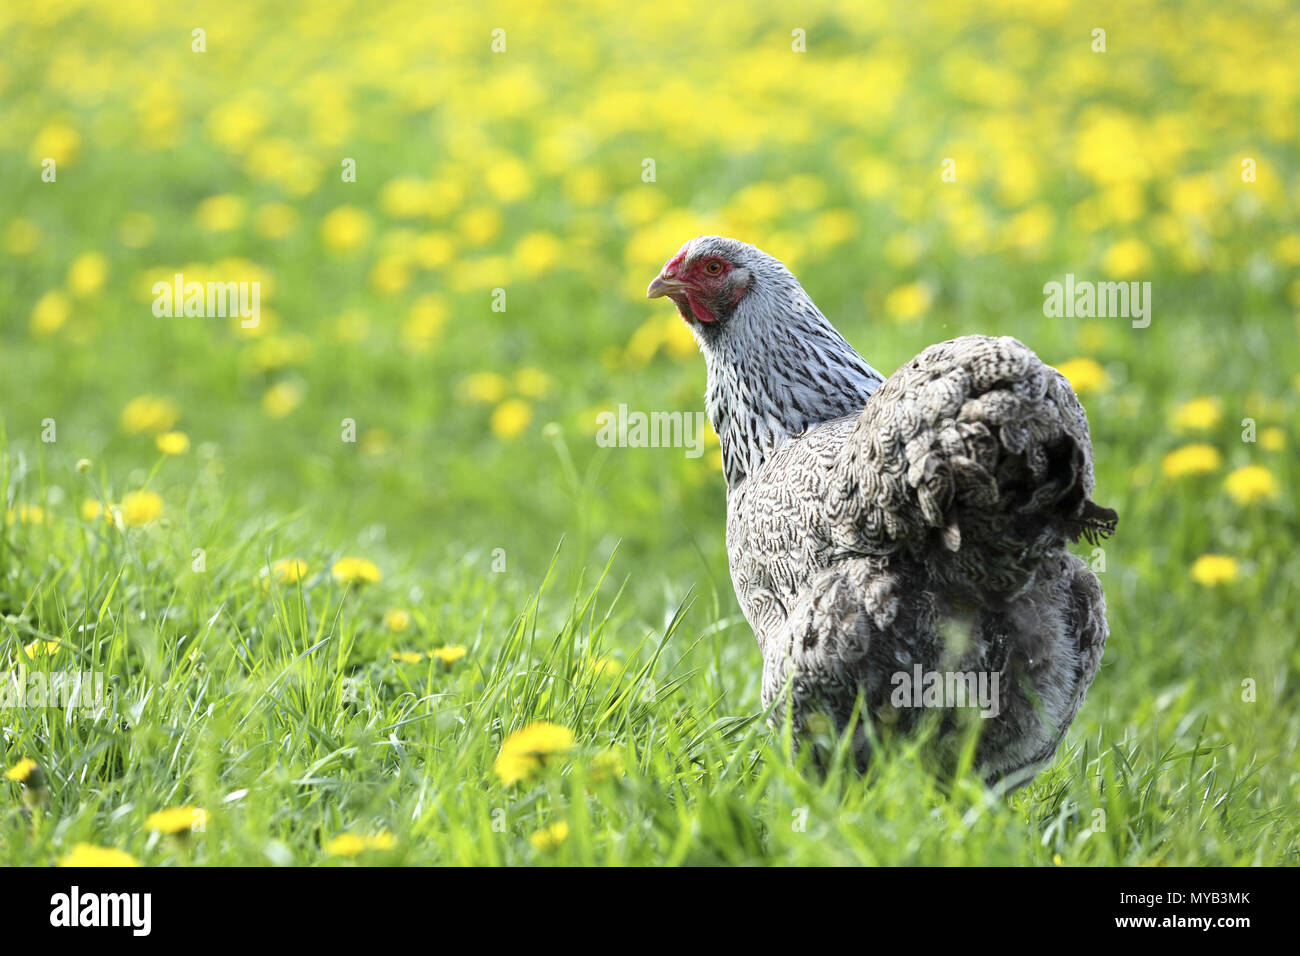 Domestic Chicken, breed: Wyandotte. Hen in a meadow with Dandelion flowers. Germany Stock Photo